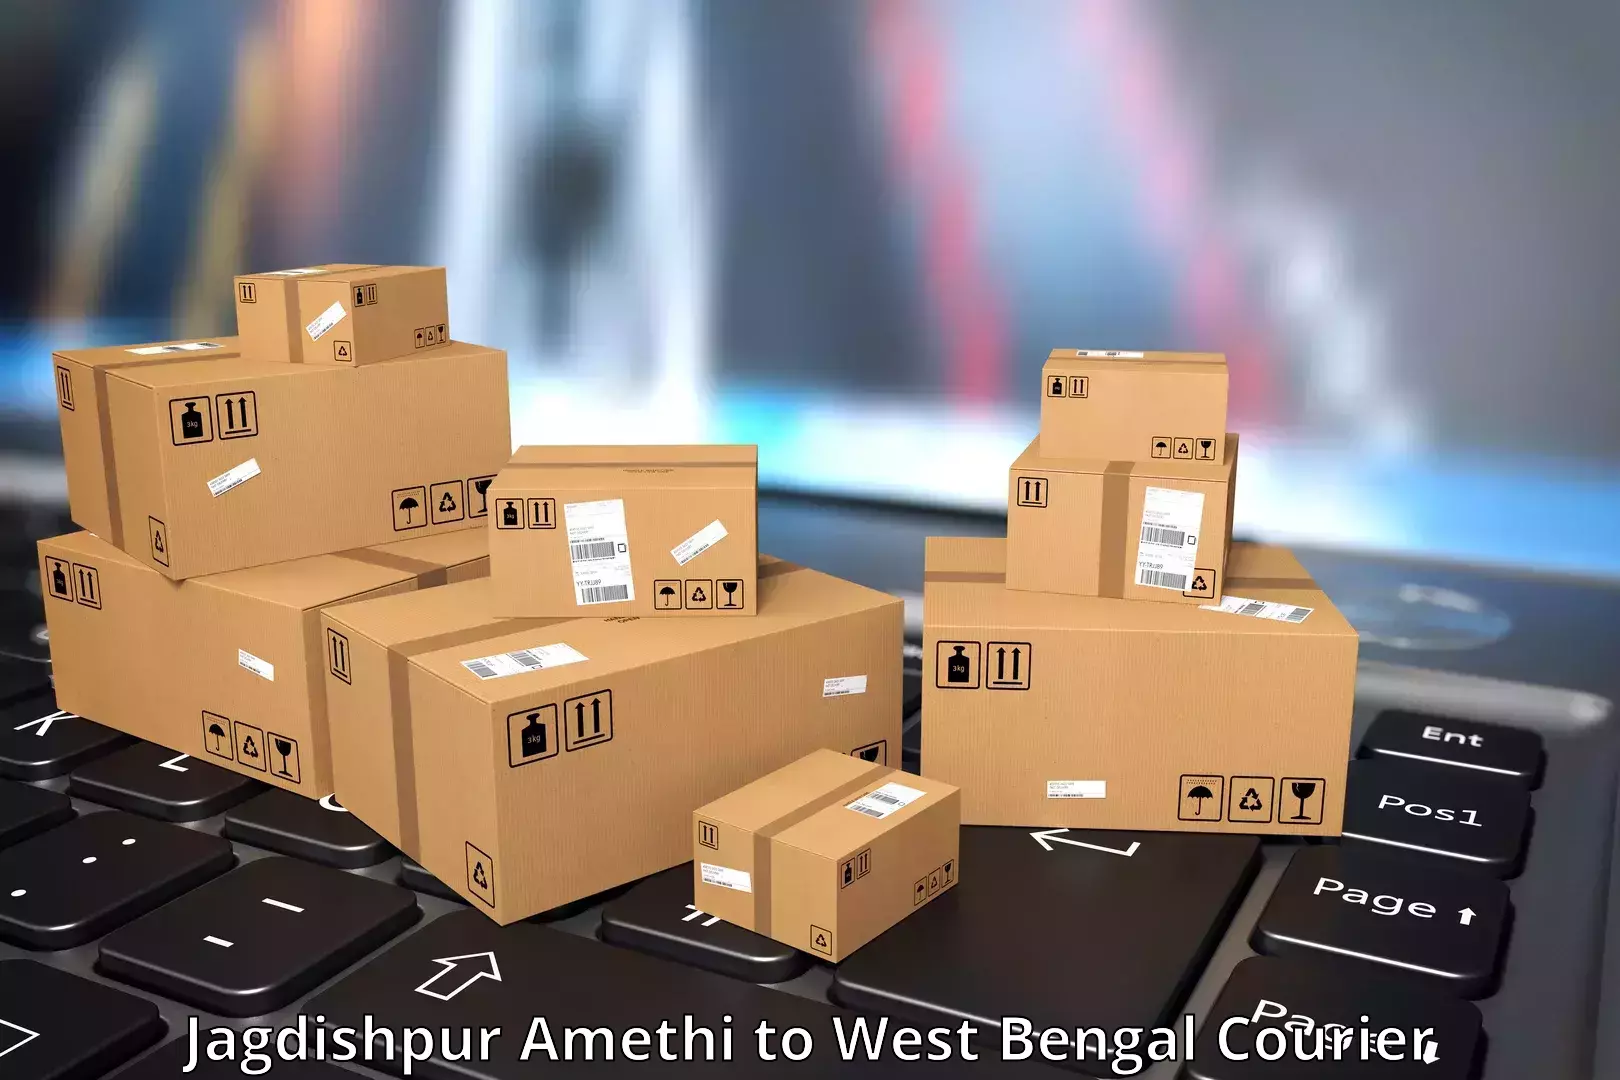 Efficient order fulfillment Jagdishpur Amethi to West Bengal